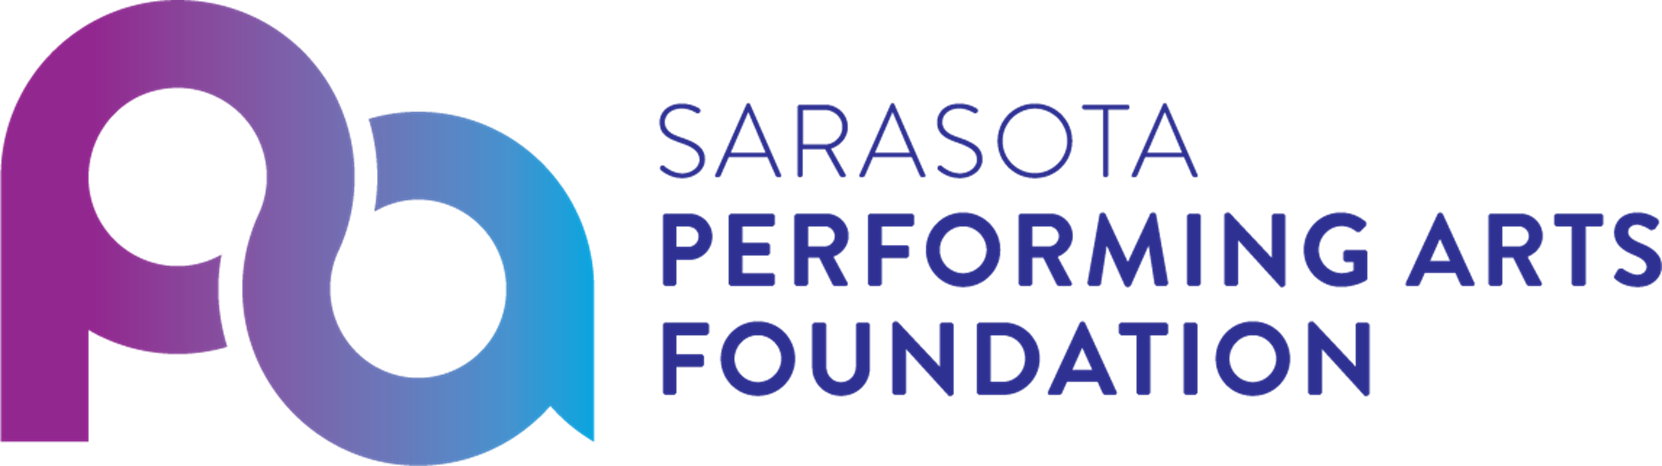 Sarasota Performing Arts Foundation